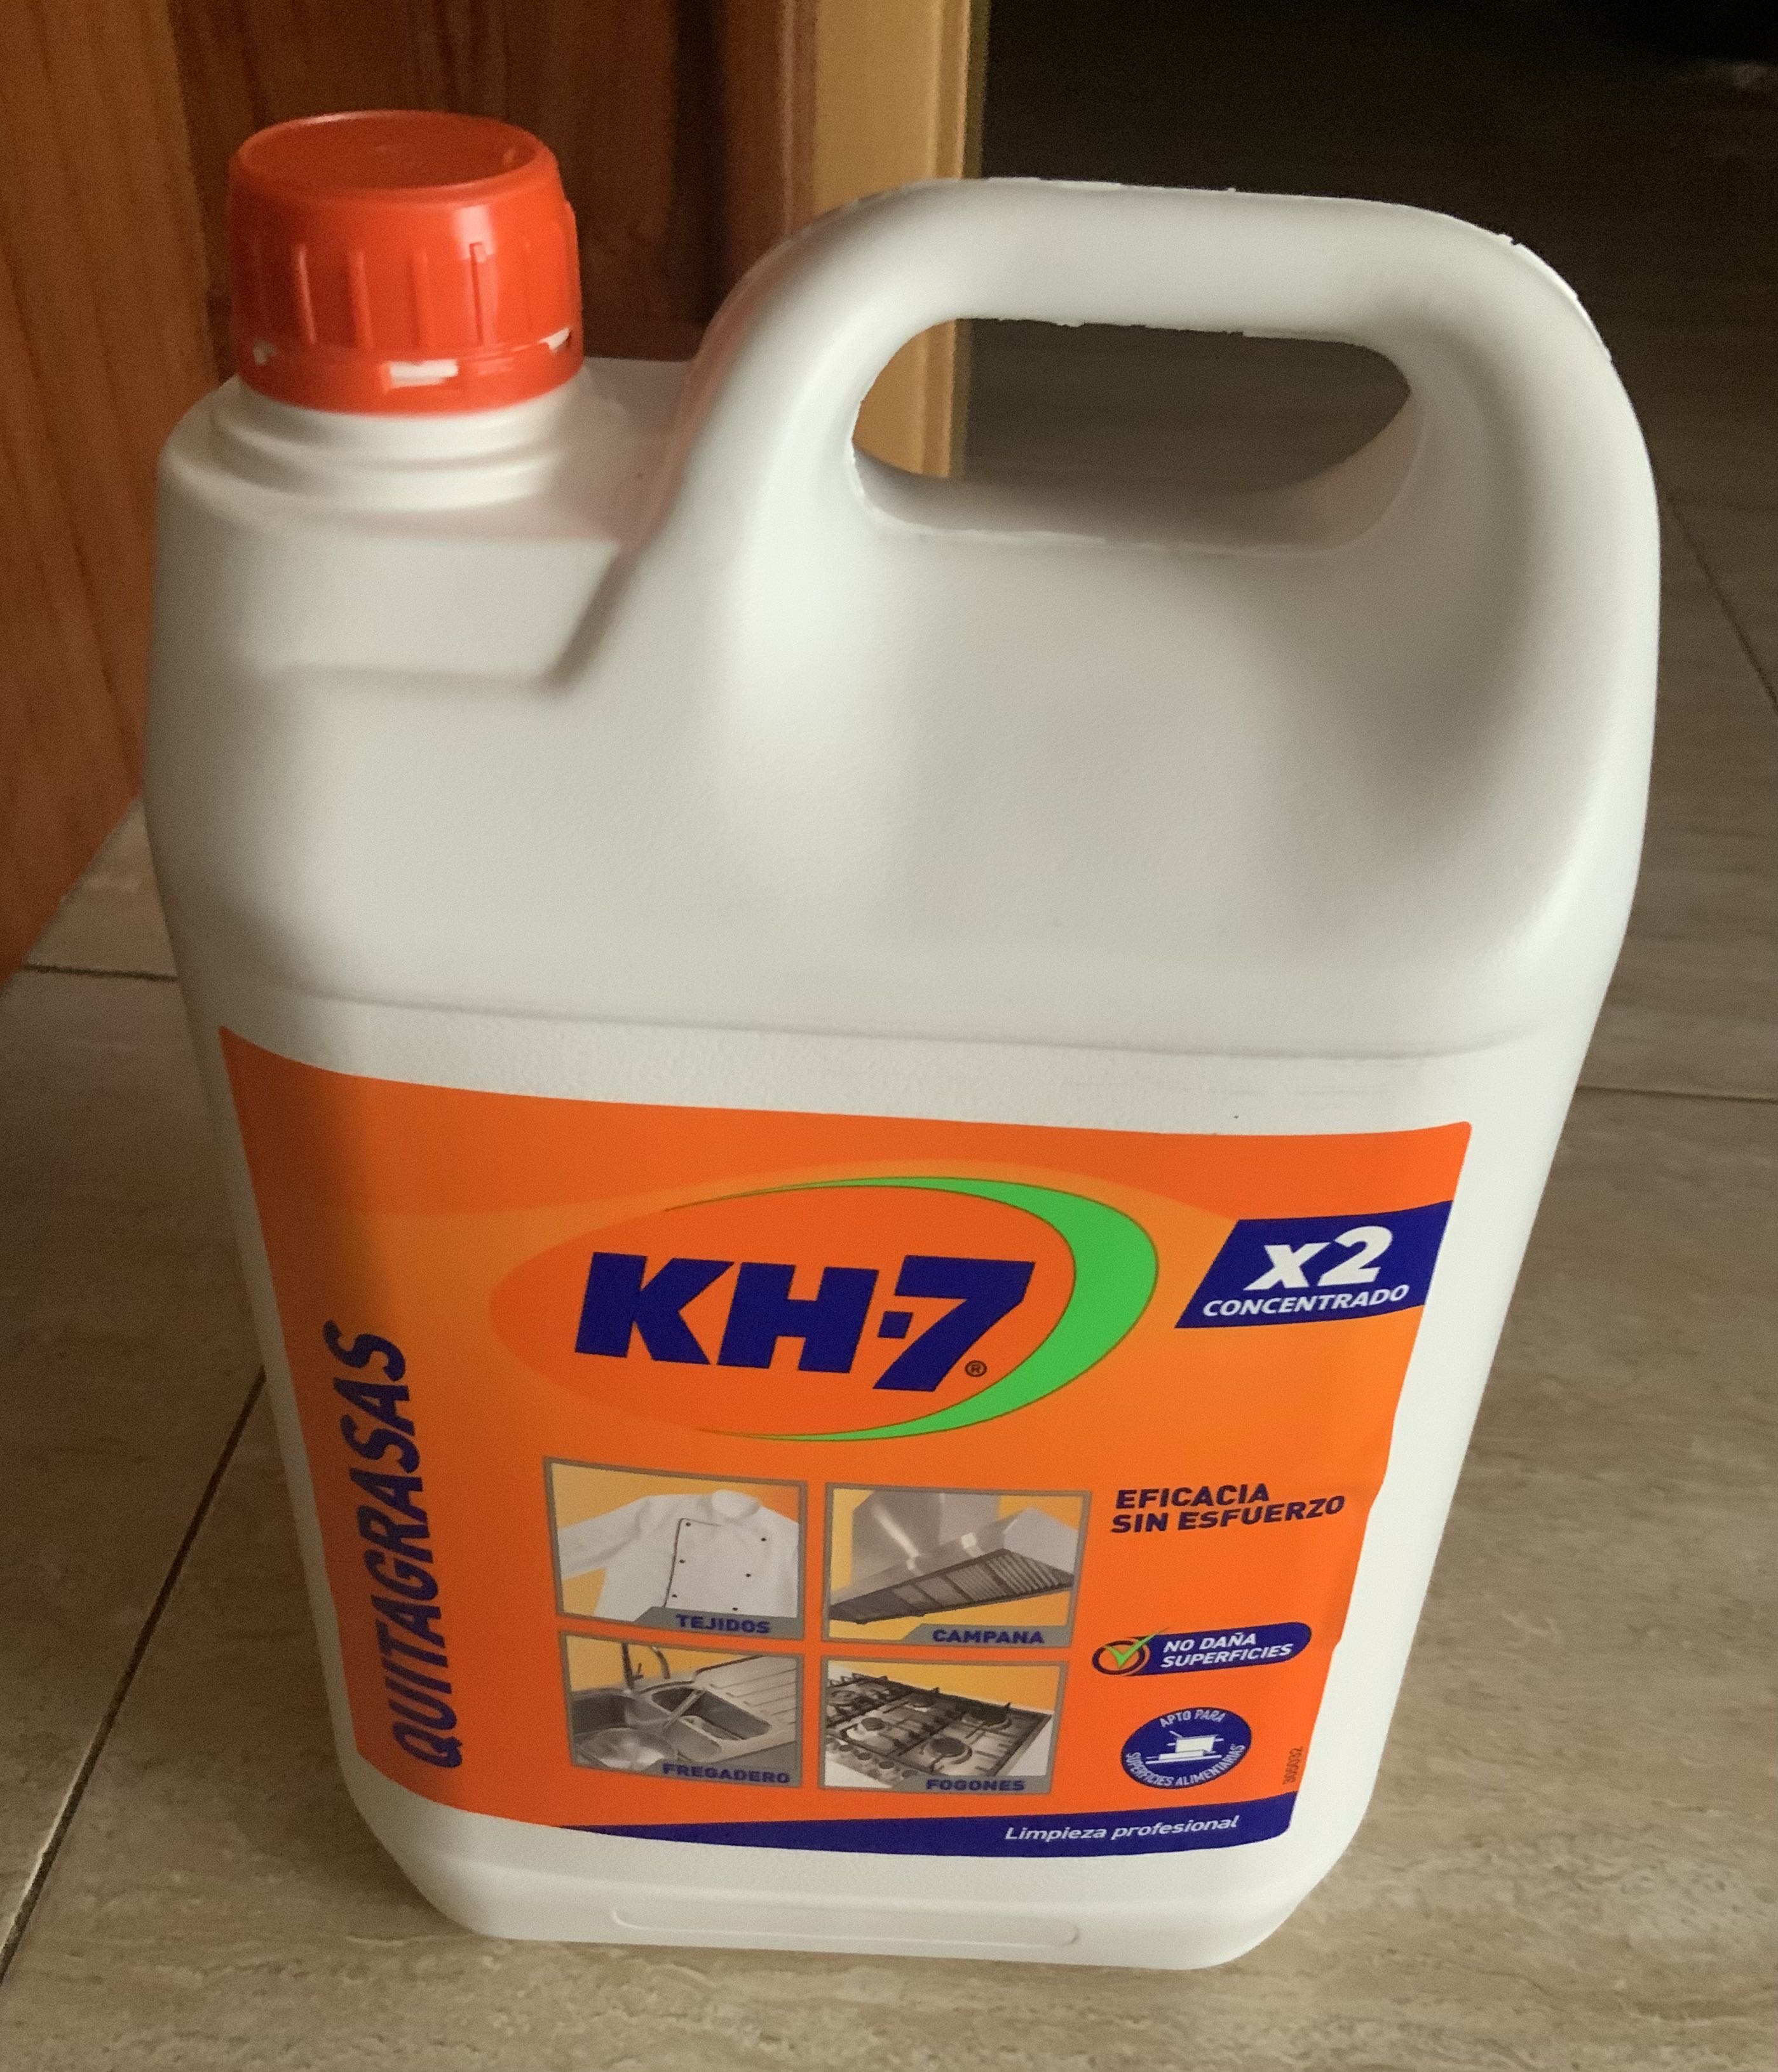 Producto de limpieza profesional quitagrasas 5L - KH7